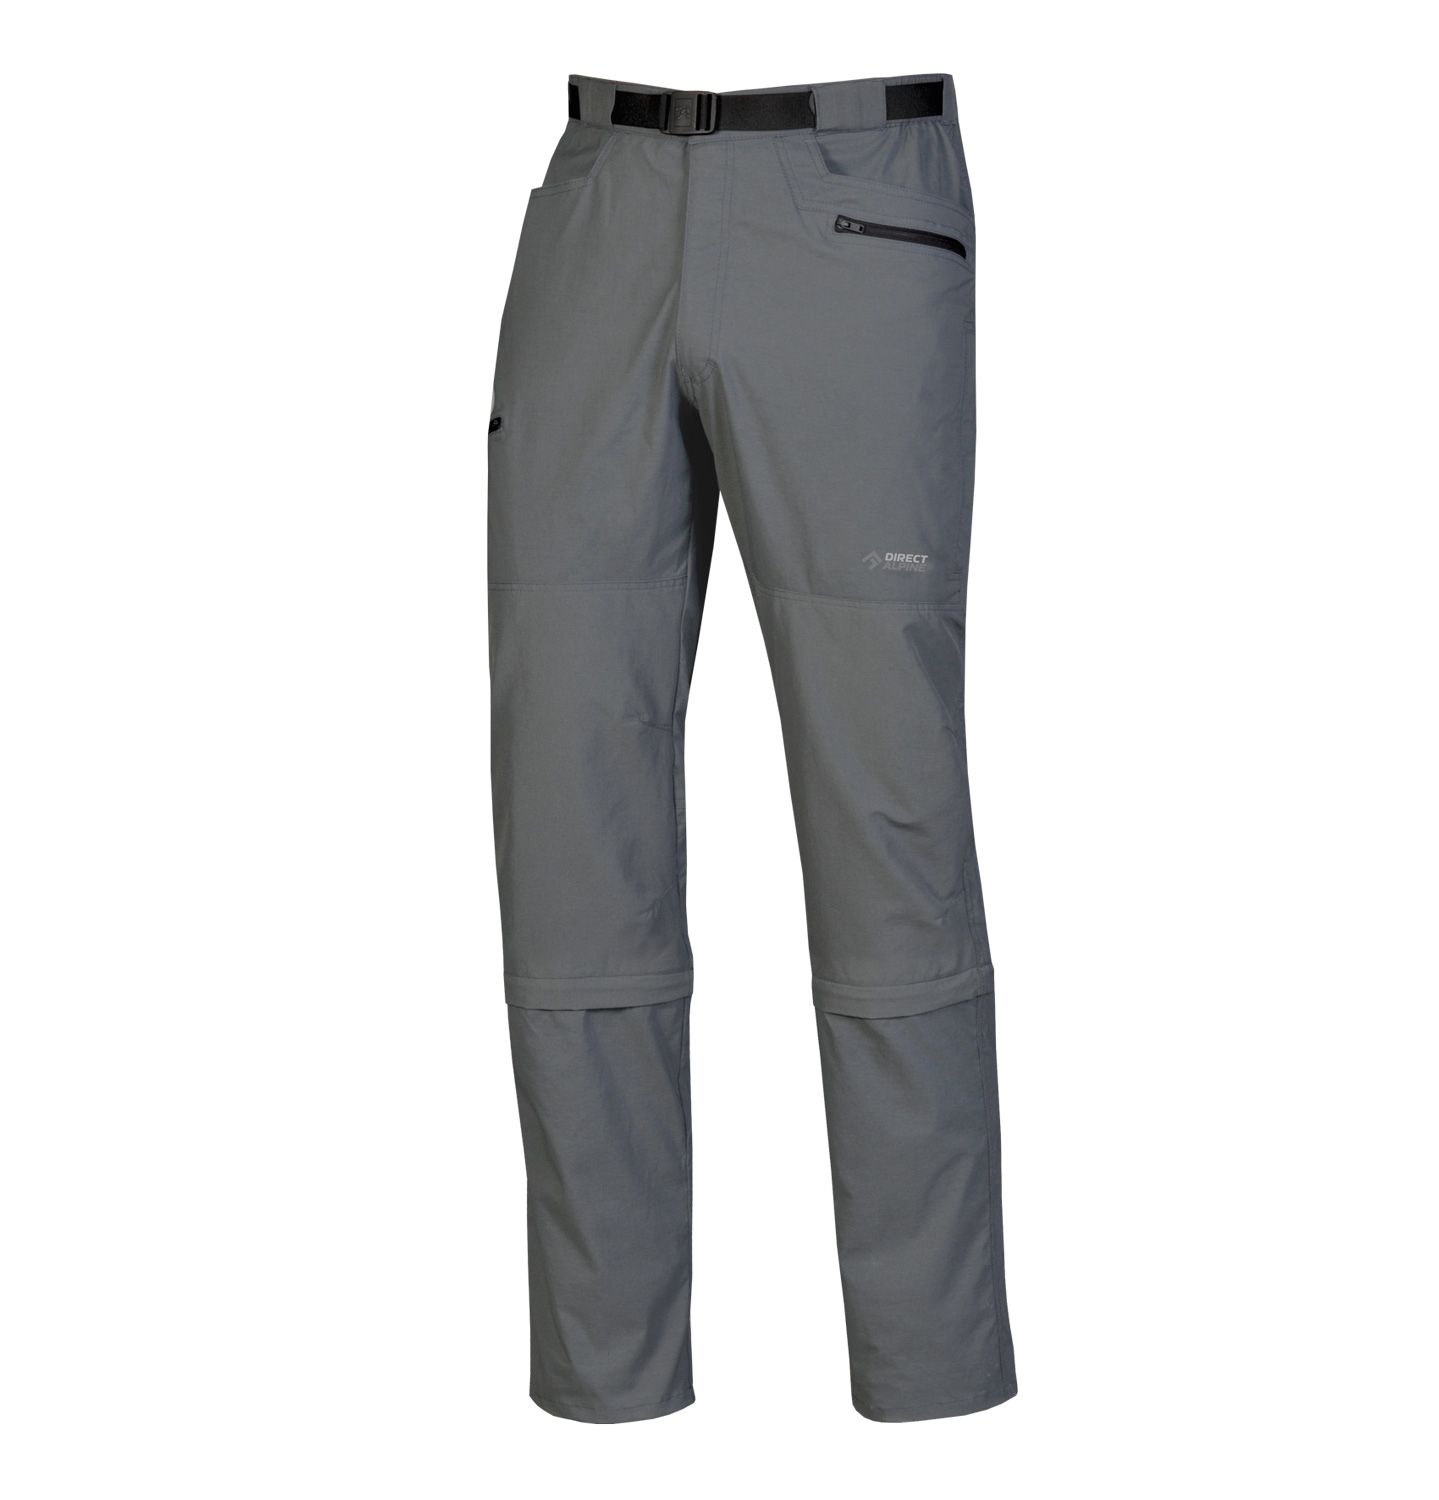 Direct Alpine kalhoty BORNEO Barva: šedá (anthracite), Velikost: M